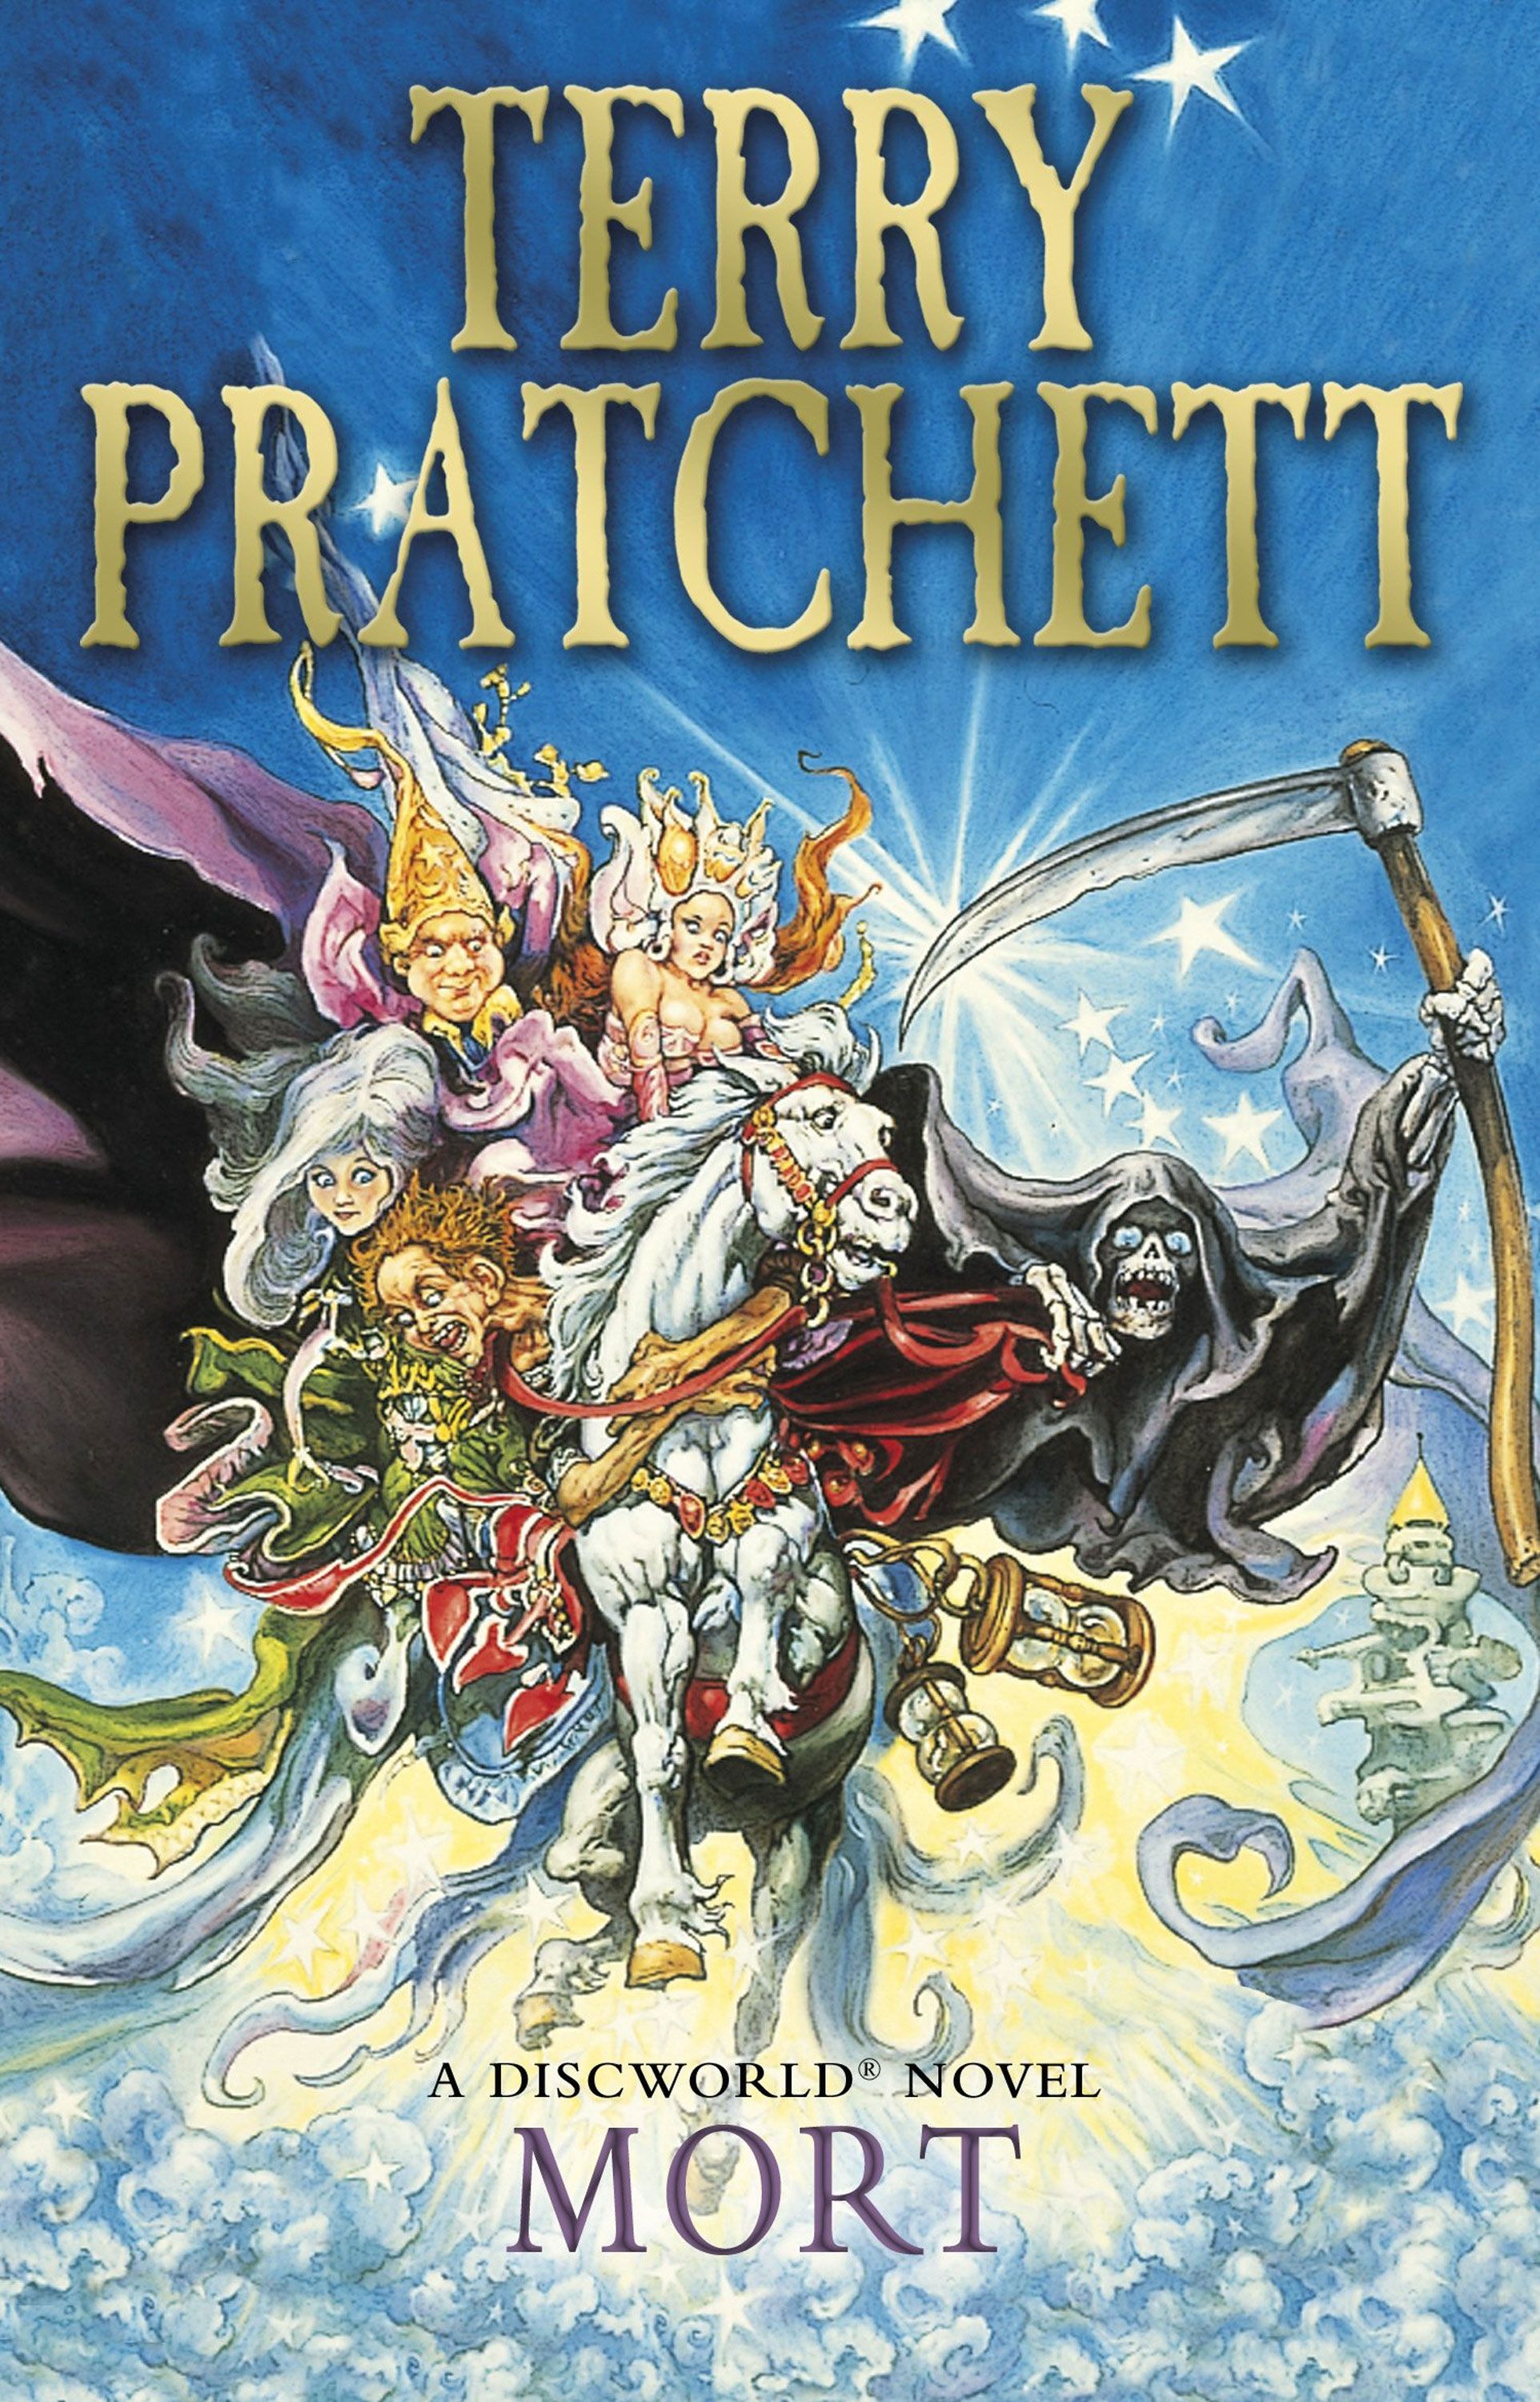 BBC Studios Plans to Adapt Terry Pratchett's Discworld for TV | Geek Culture